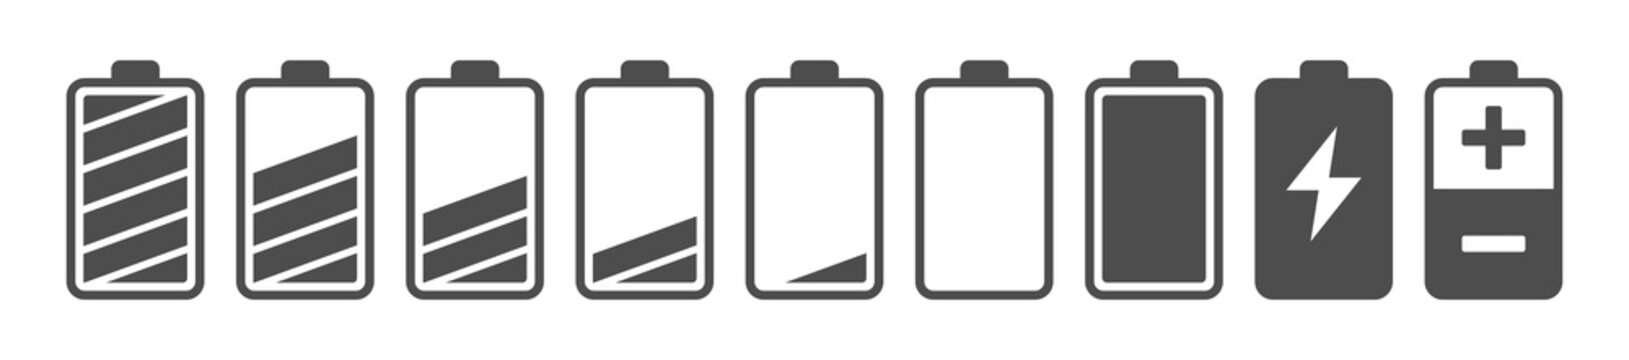 Battery capacity charge icon symbols